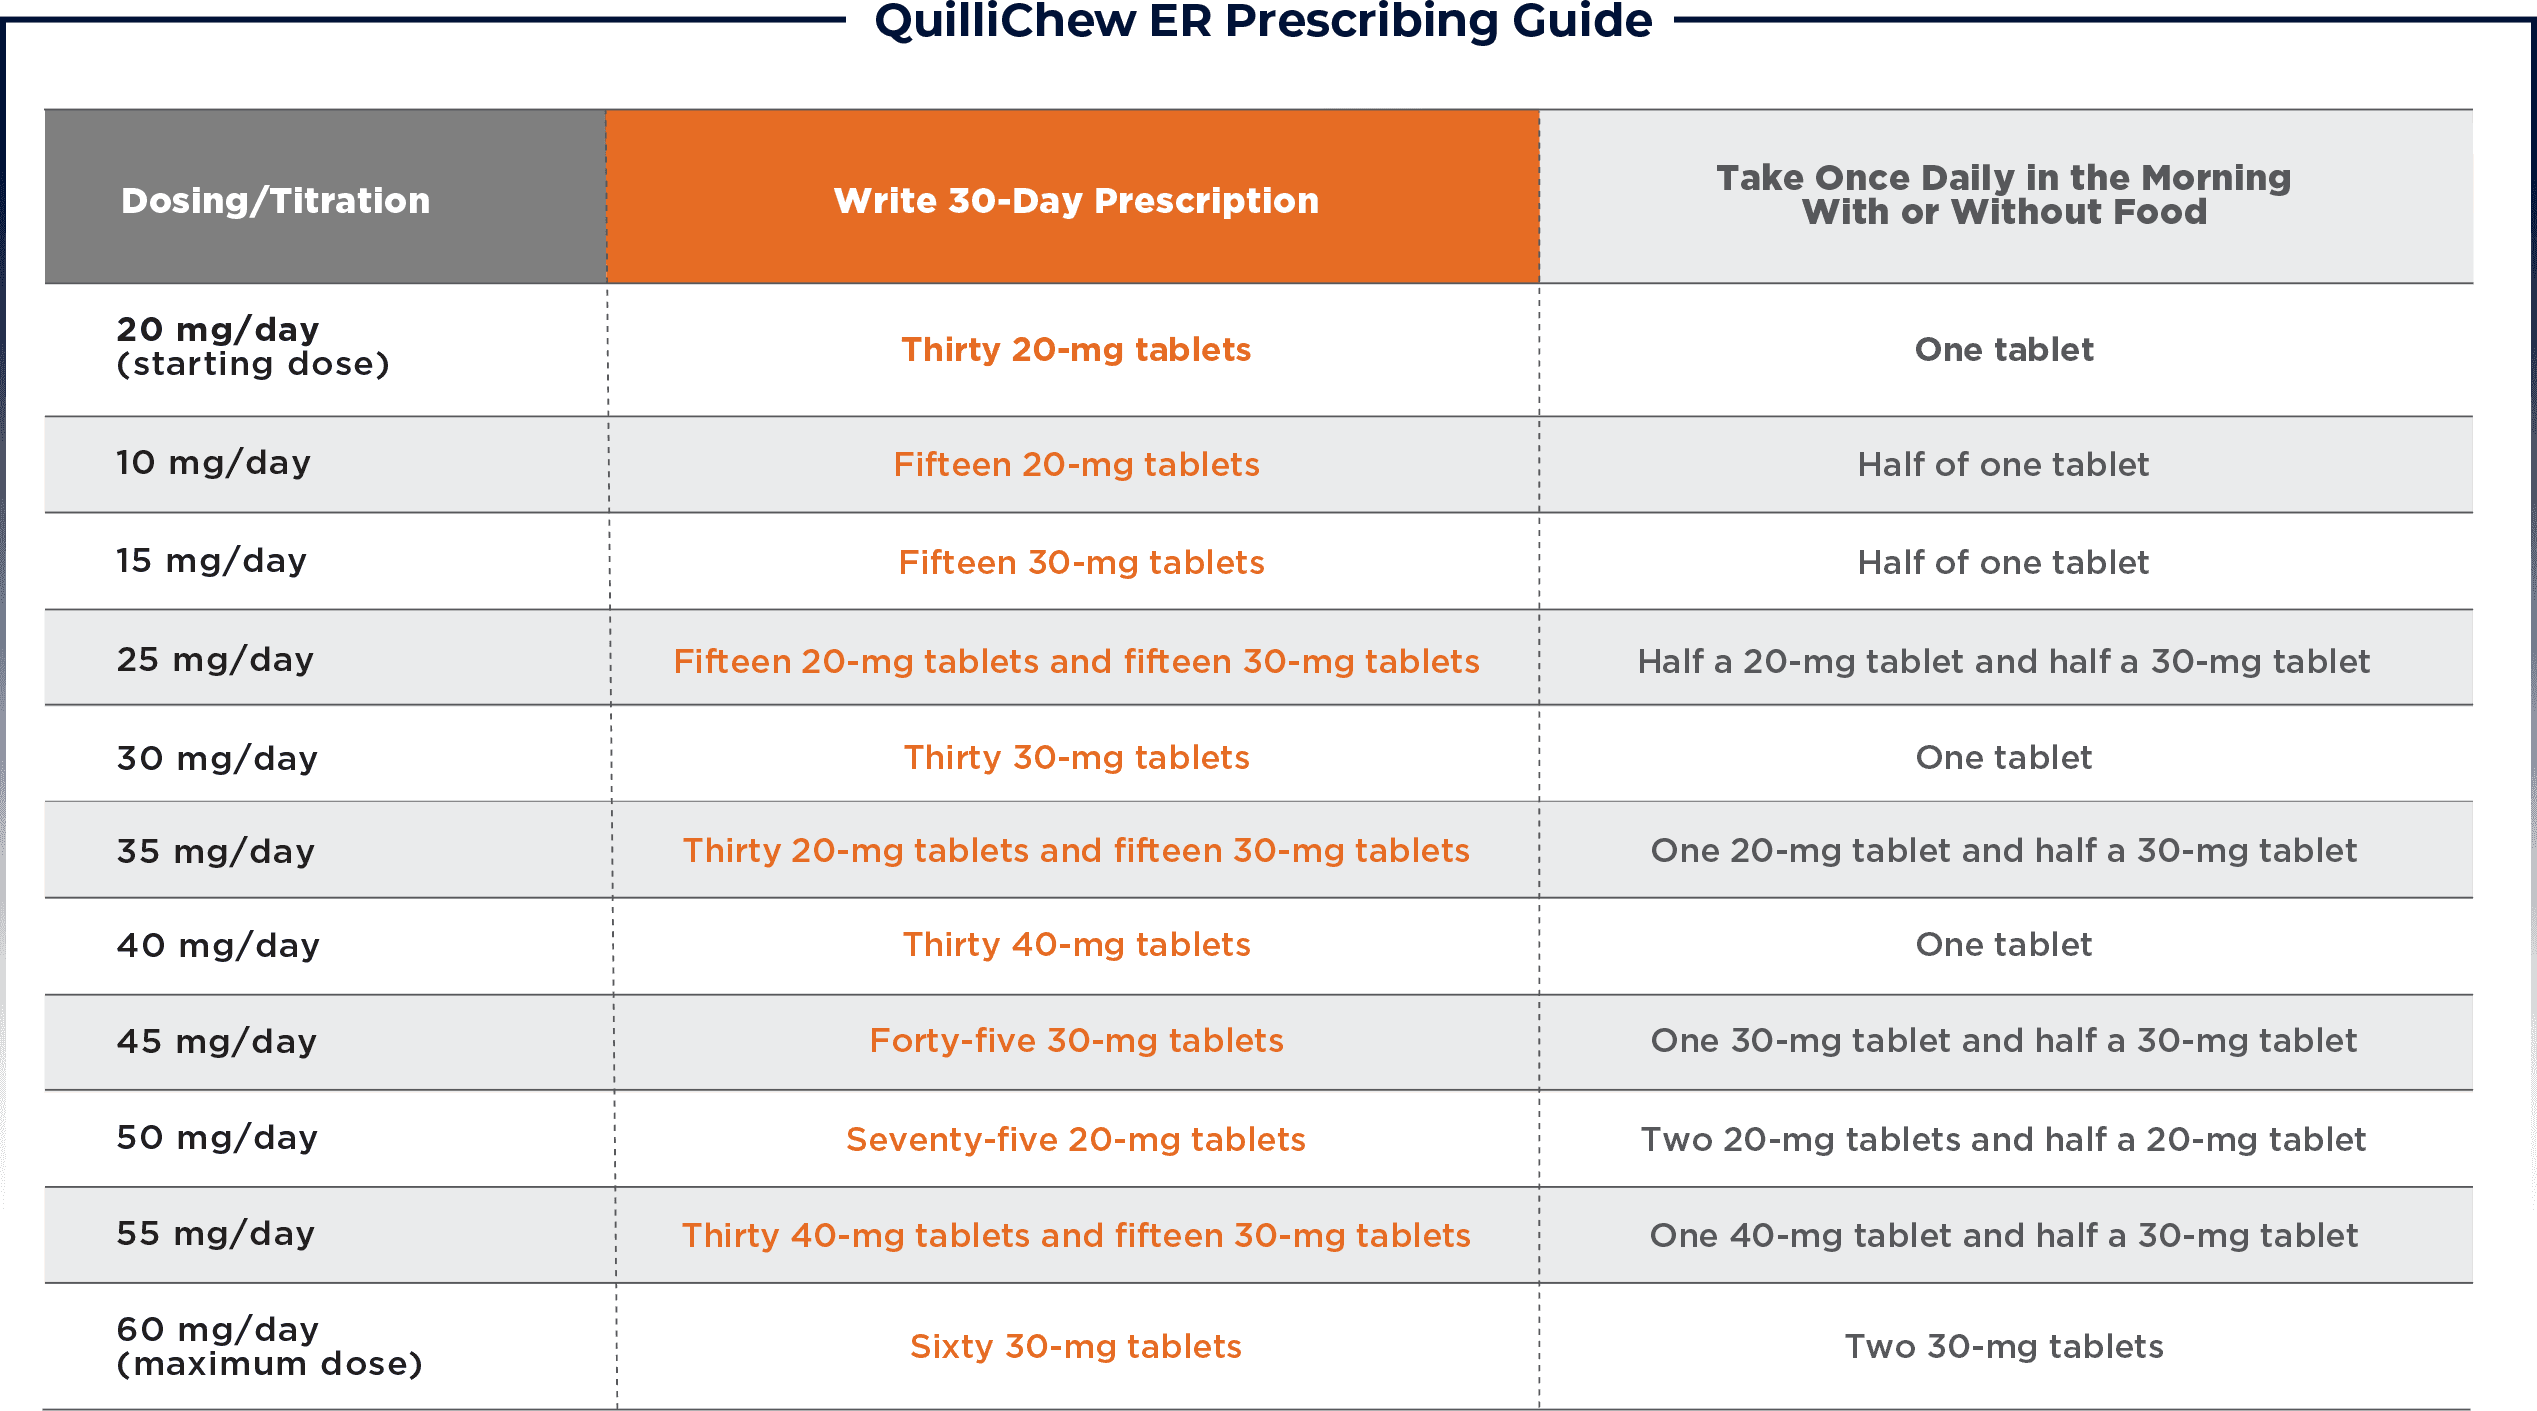 Table: QuilliChew ER Prescribing Guide